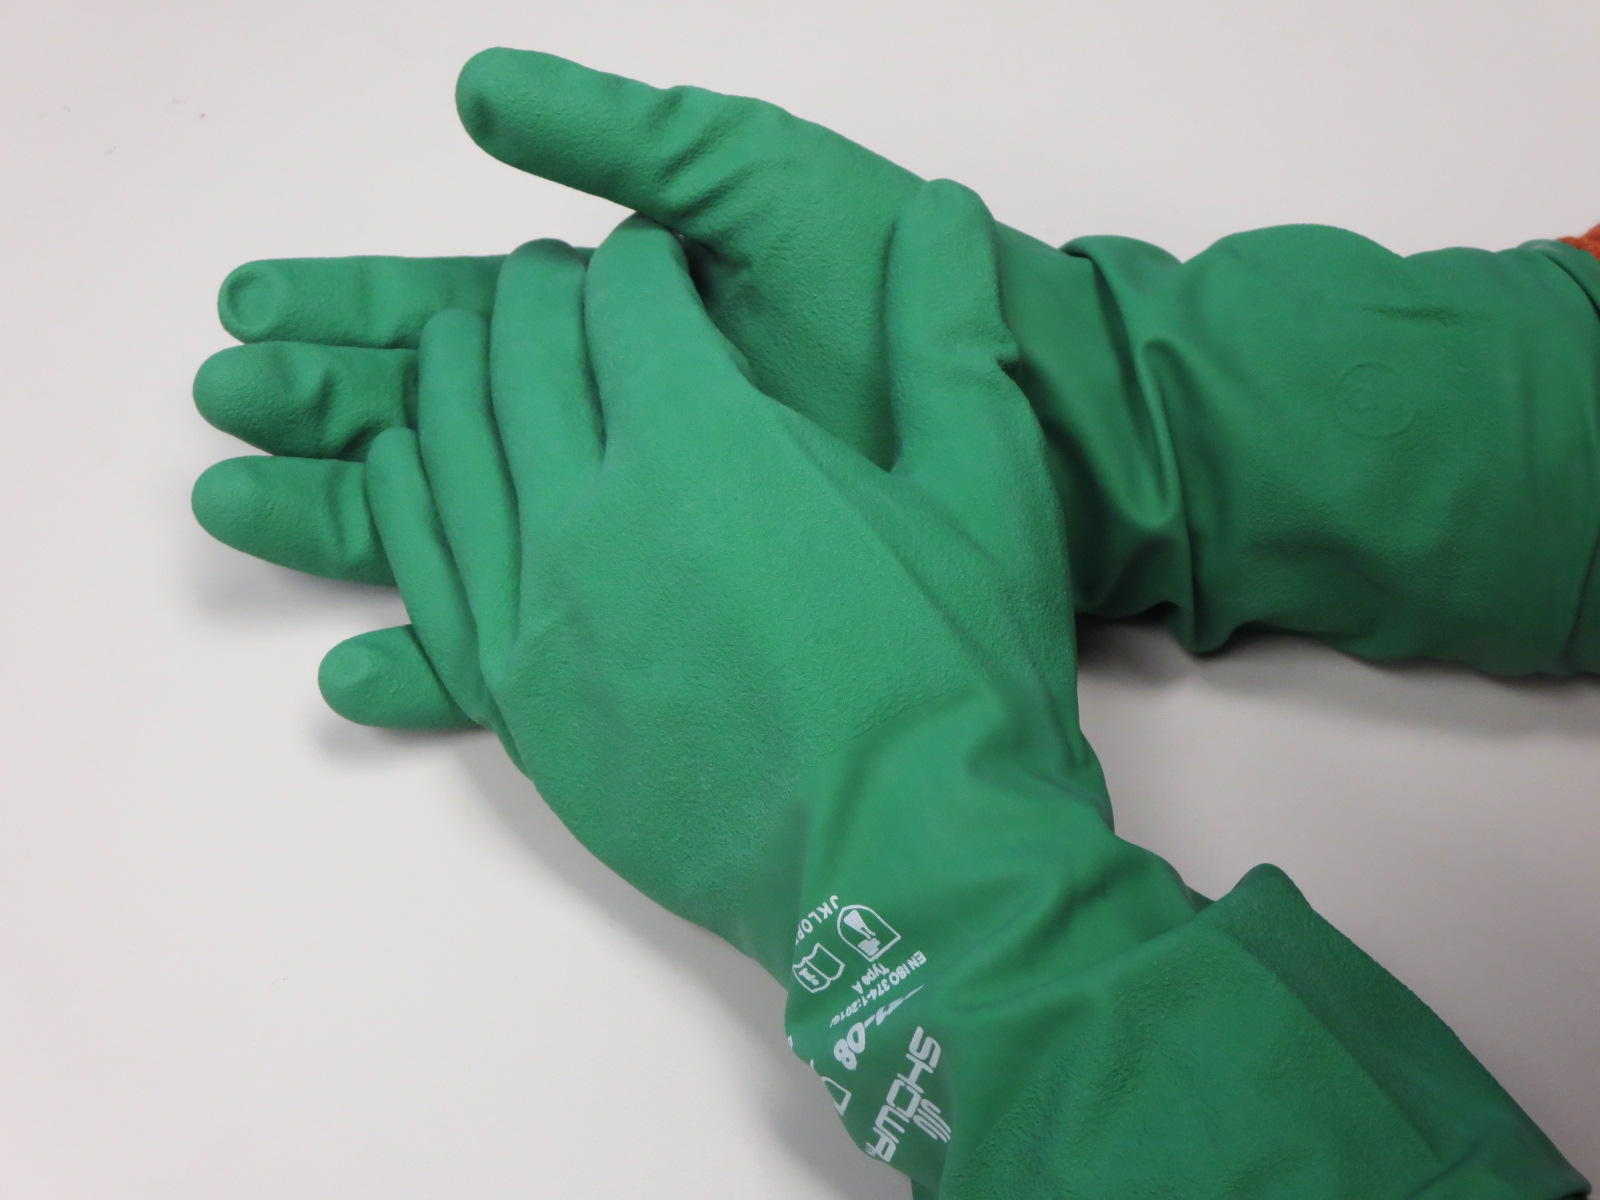 Showa® 731 Biodegradable Flocked-Lined 15-mil  Chemical Resistant Nitrile Gloves w/ EBT